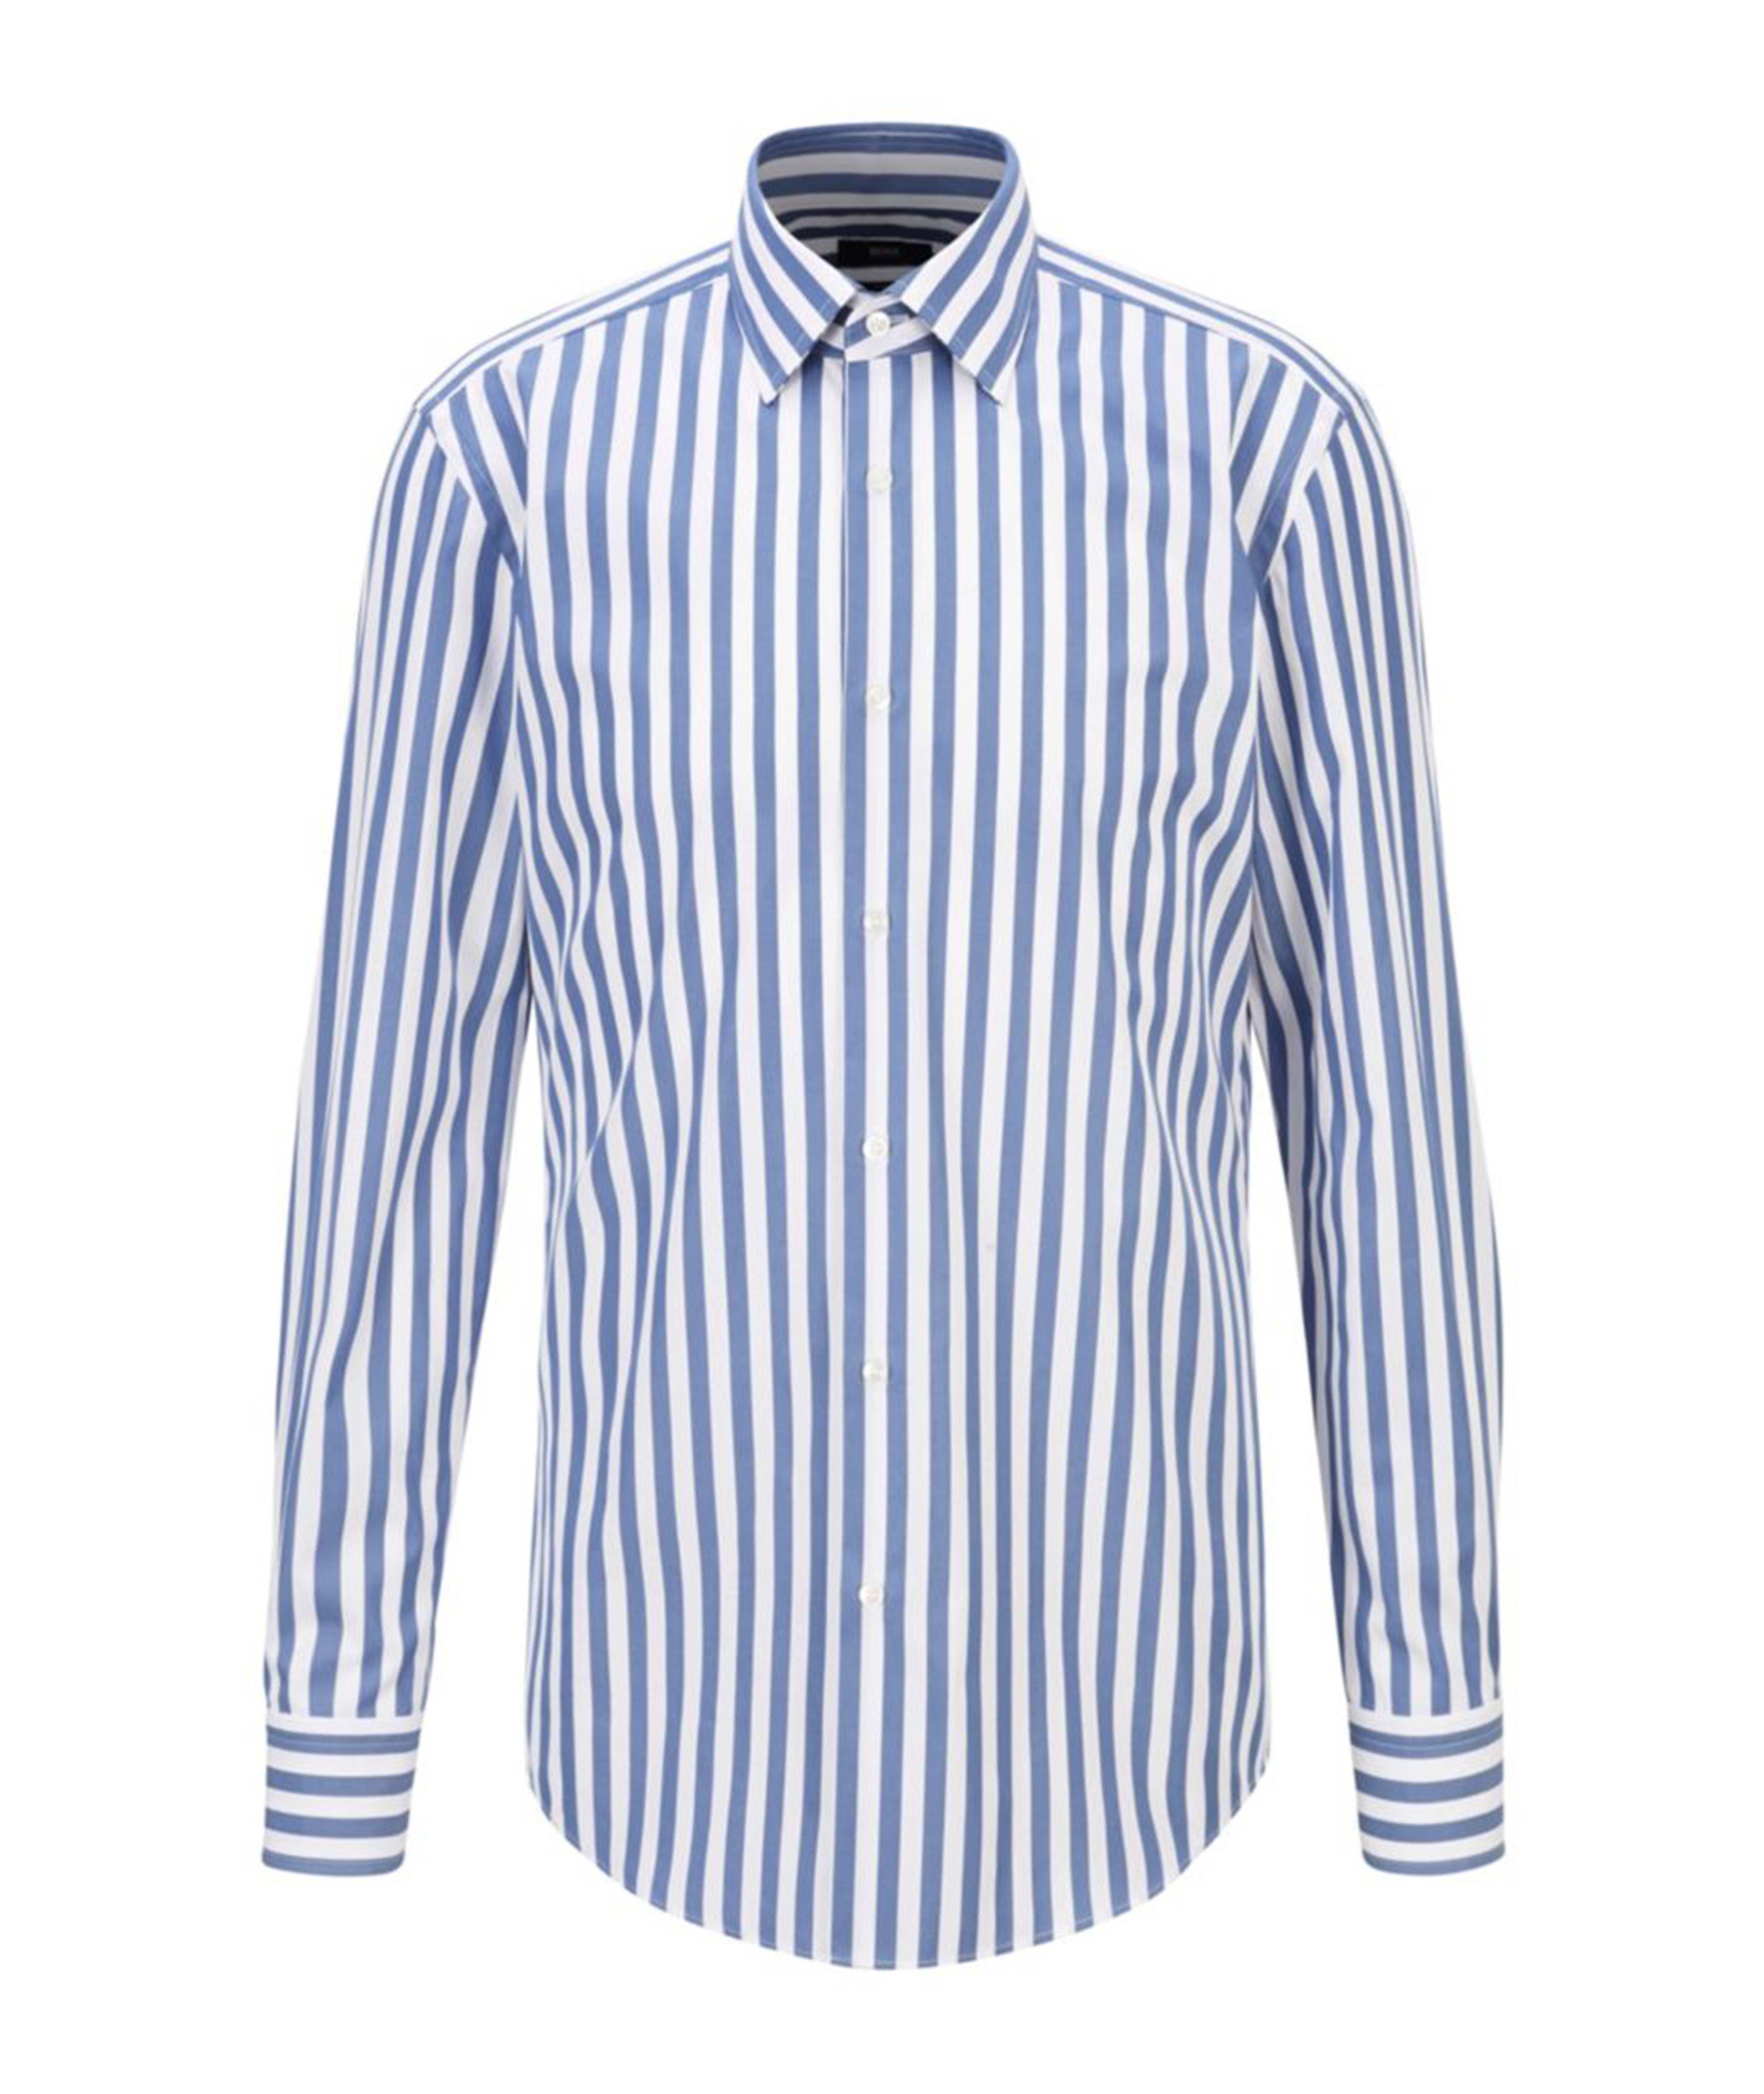 Jango Slim-Fit Striped Poplin Dress Shirt image 0